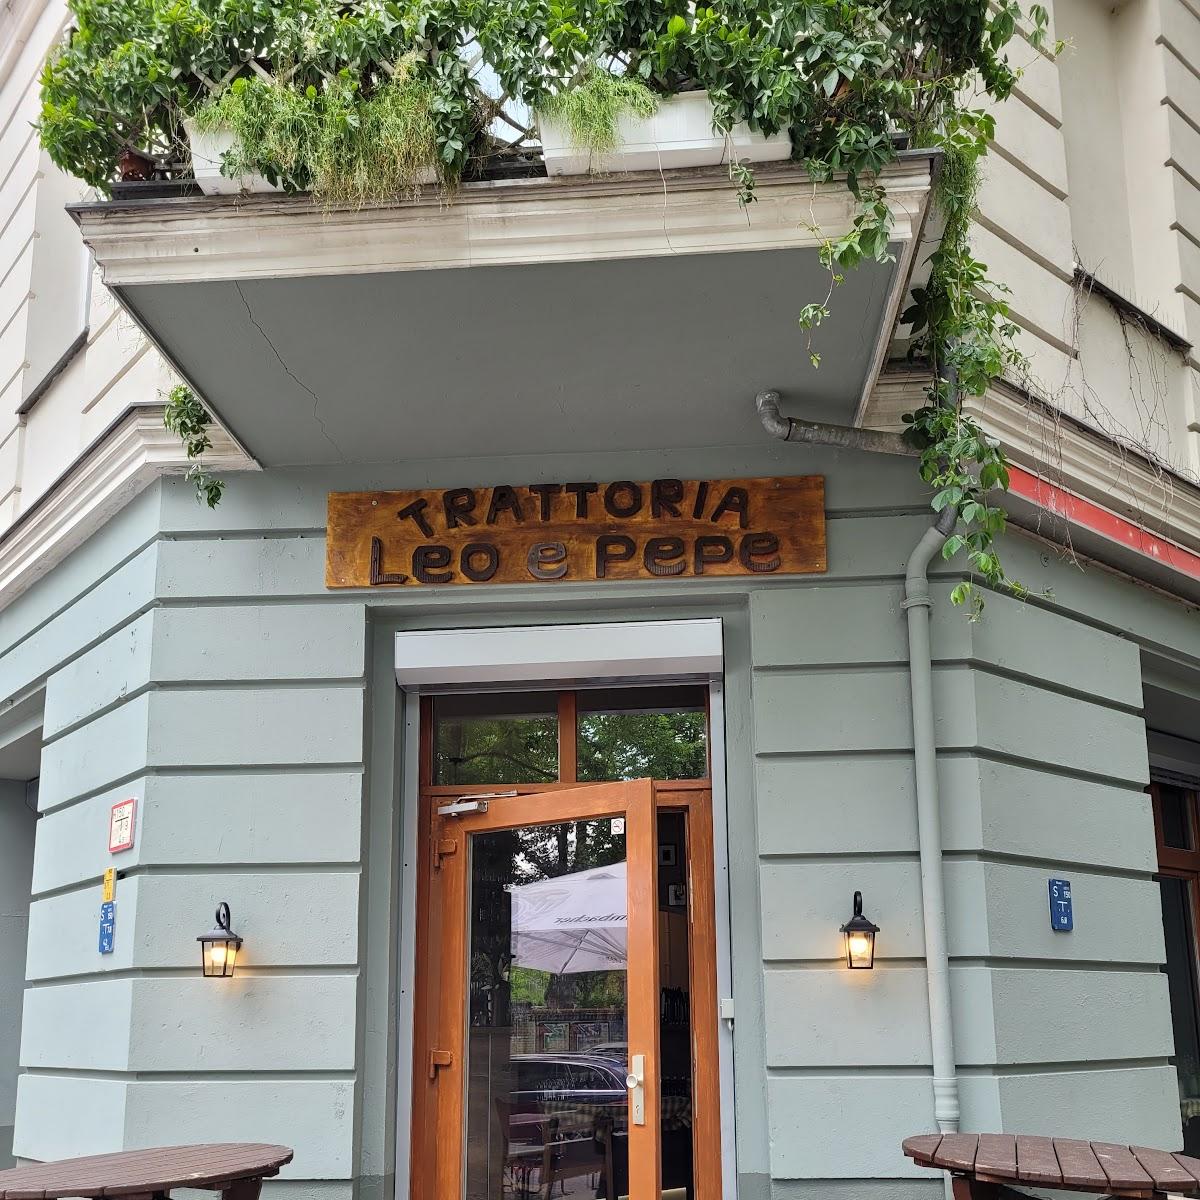 Restaurant "Trattoria leo e pepe" in Berlin